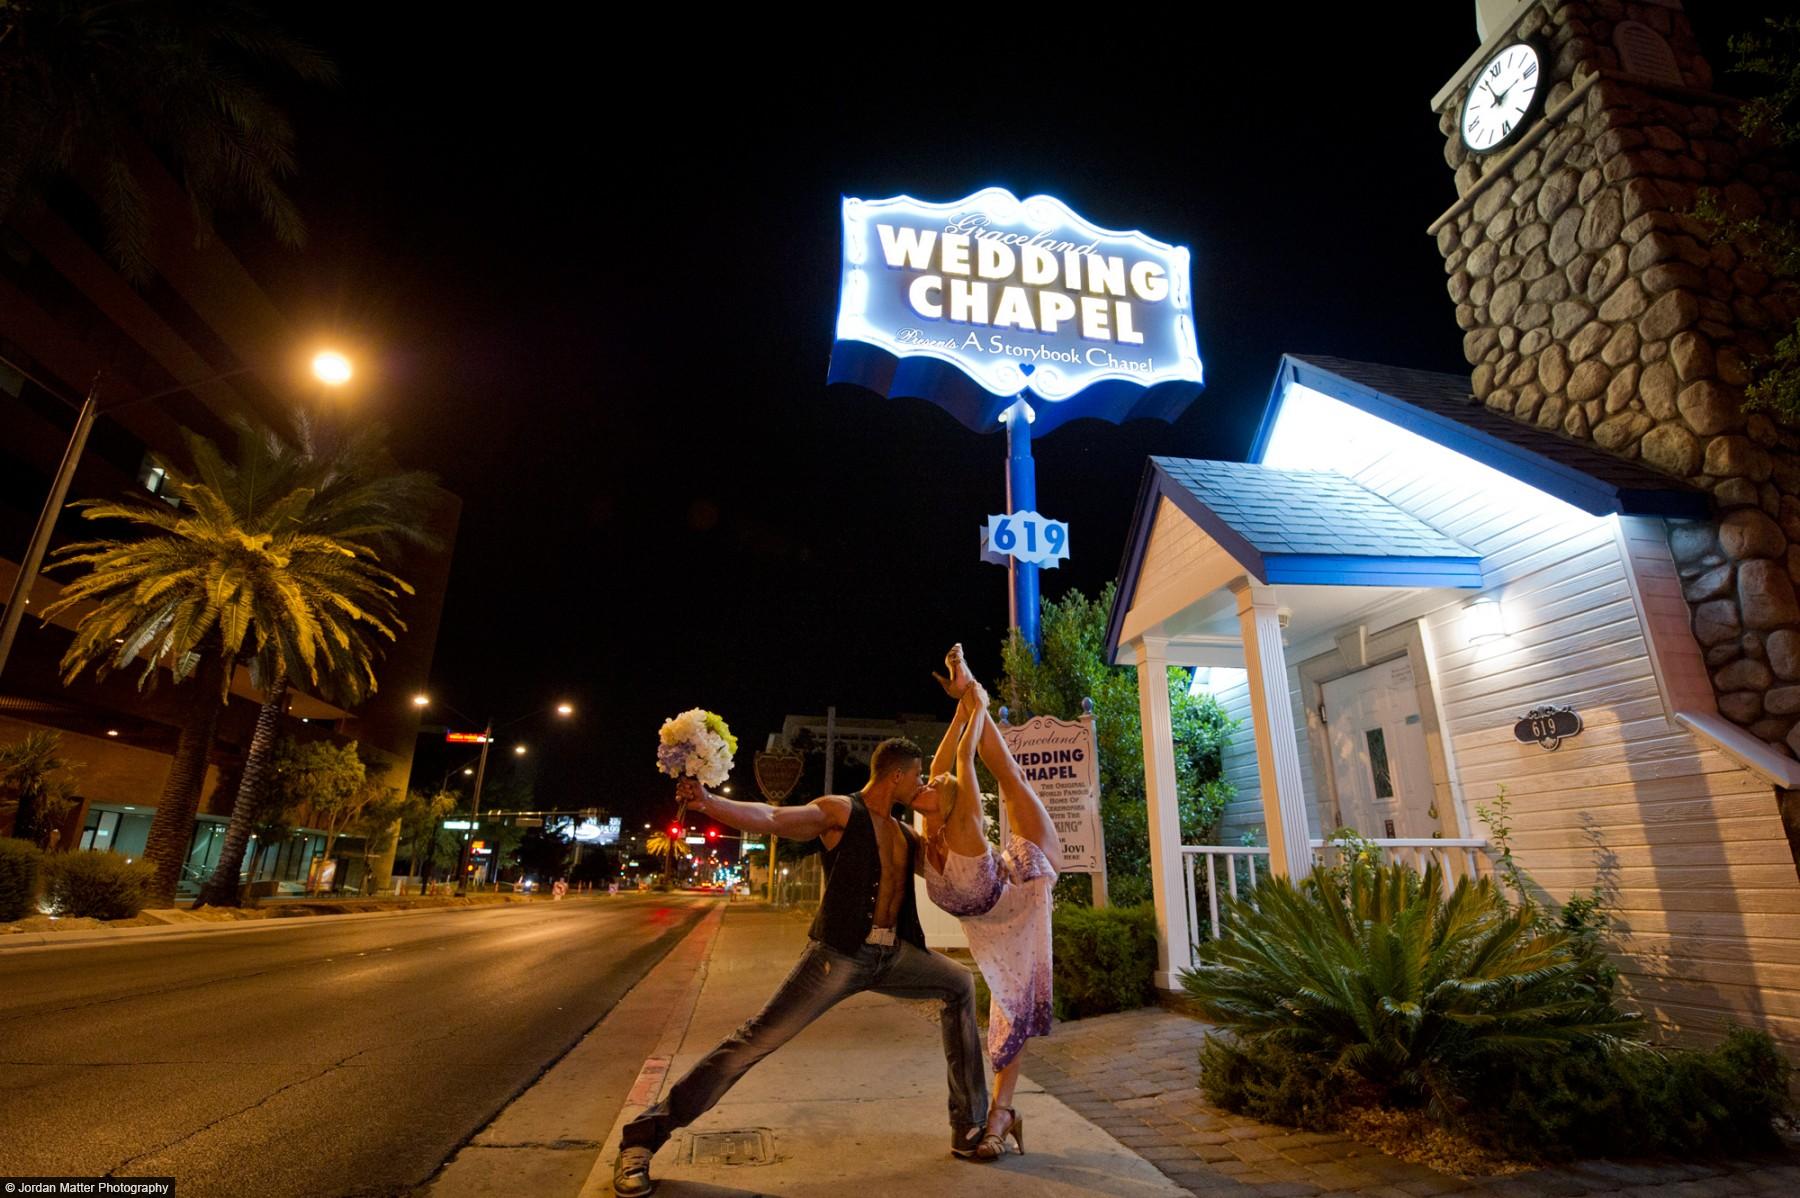 Las Vegas, NV - Joseph Rivera and Sheila Burford